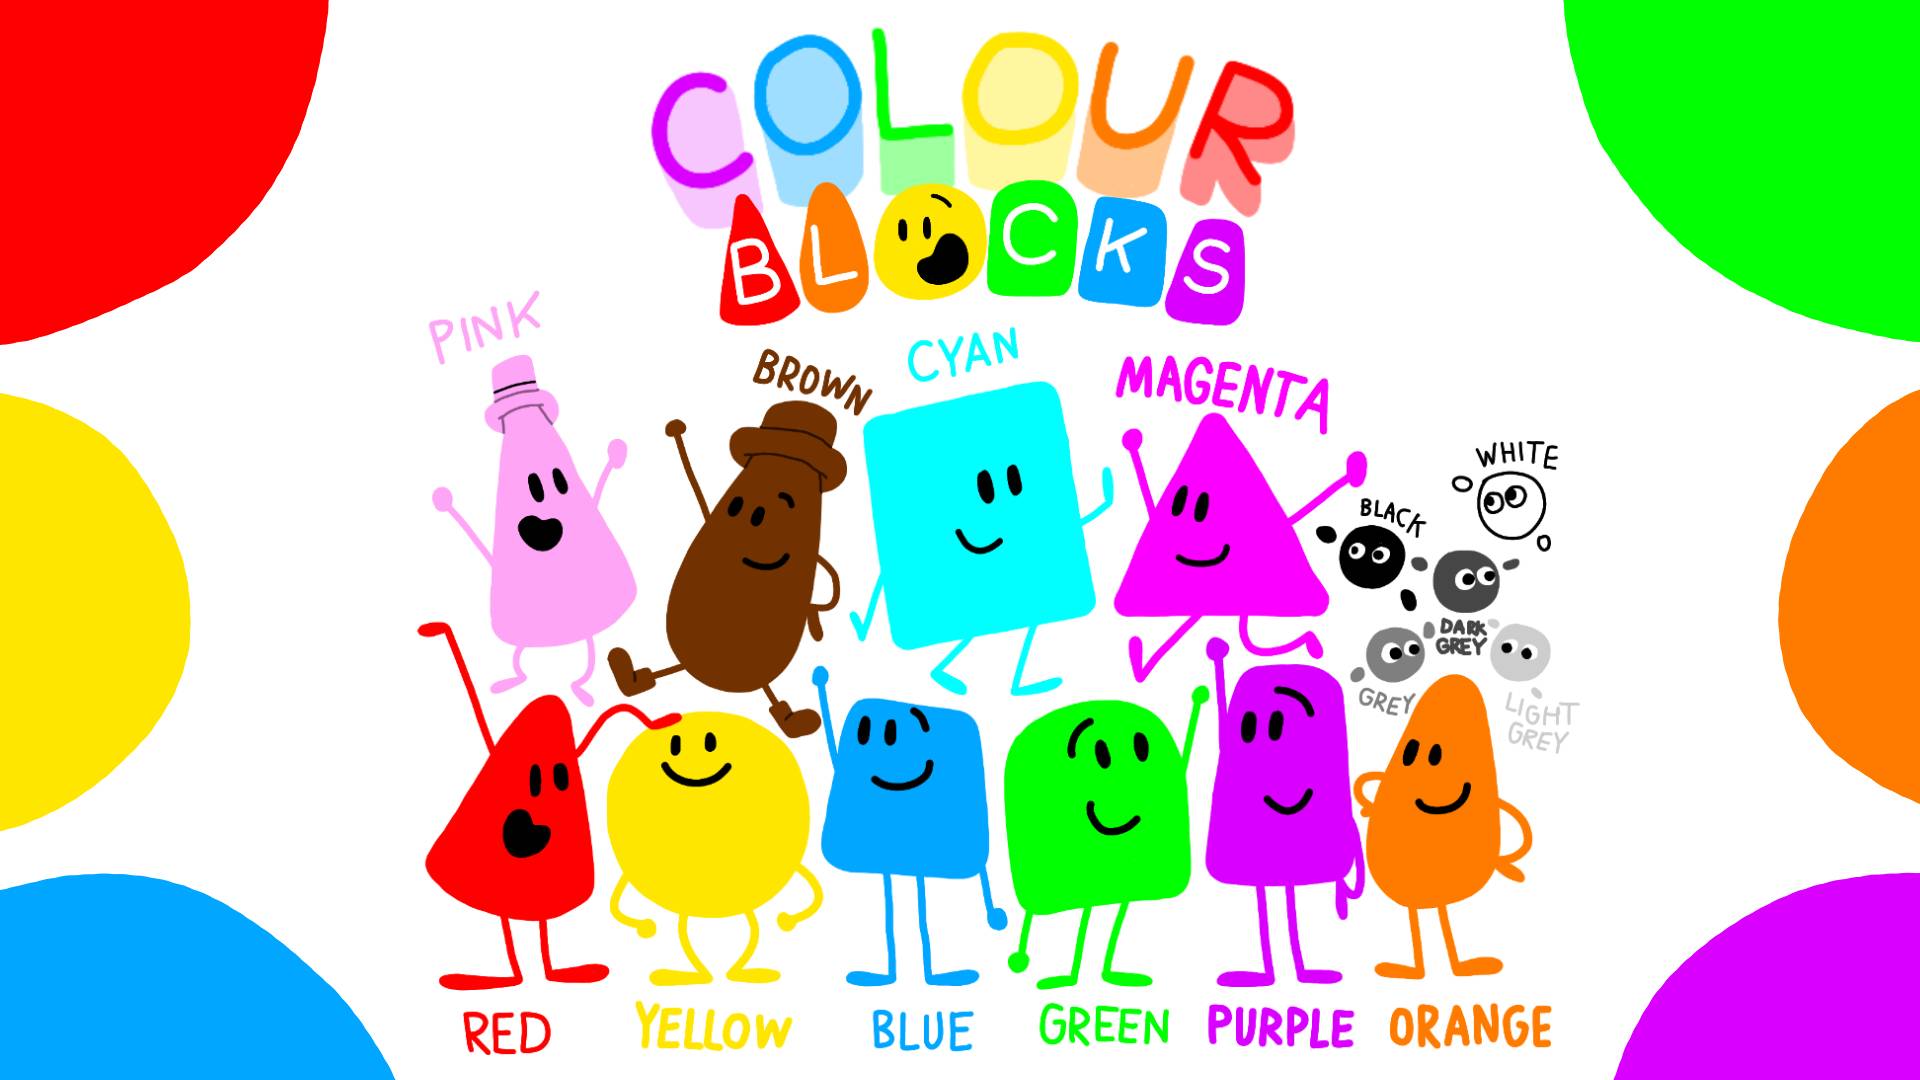 Colour Blocks Comic Studio - make comics & memes with Colour Blocks  characters